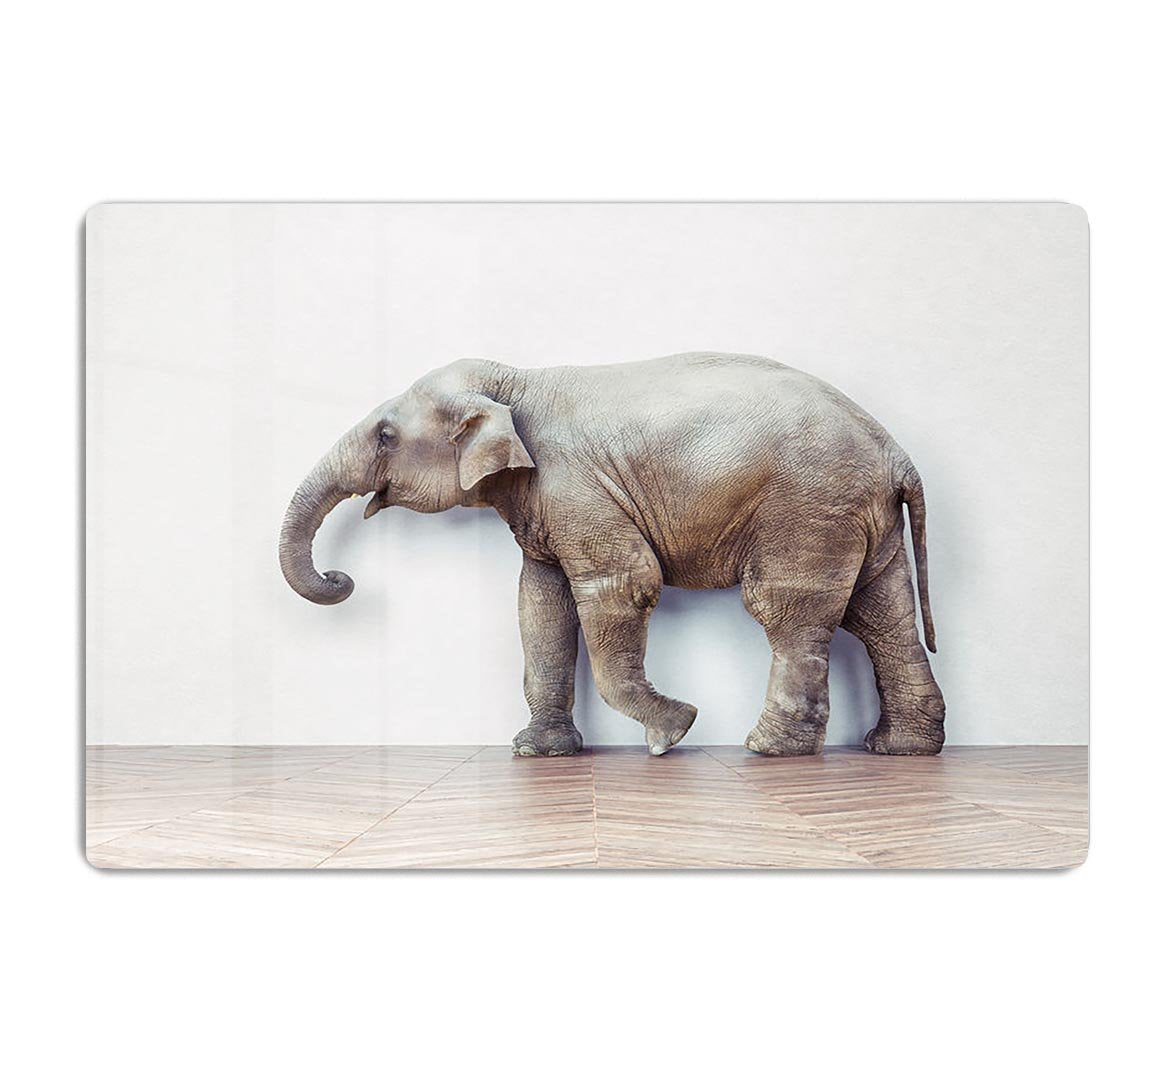 The elephant calm in the room near white wall HD Metal Print - Canvas Art Rocks - 1